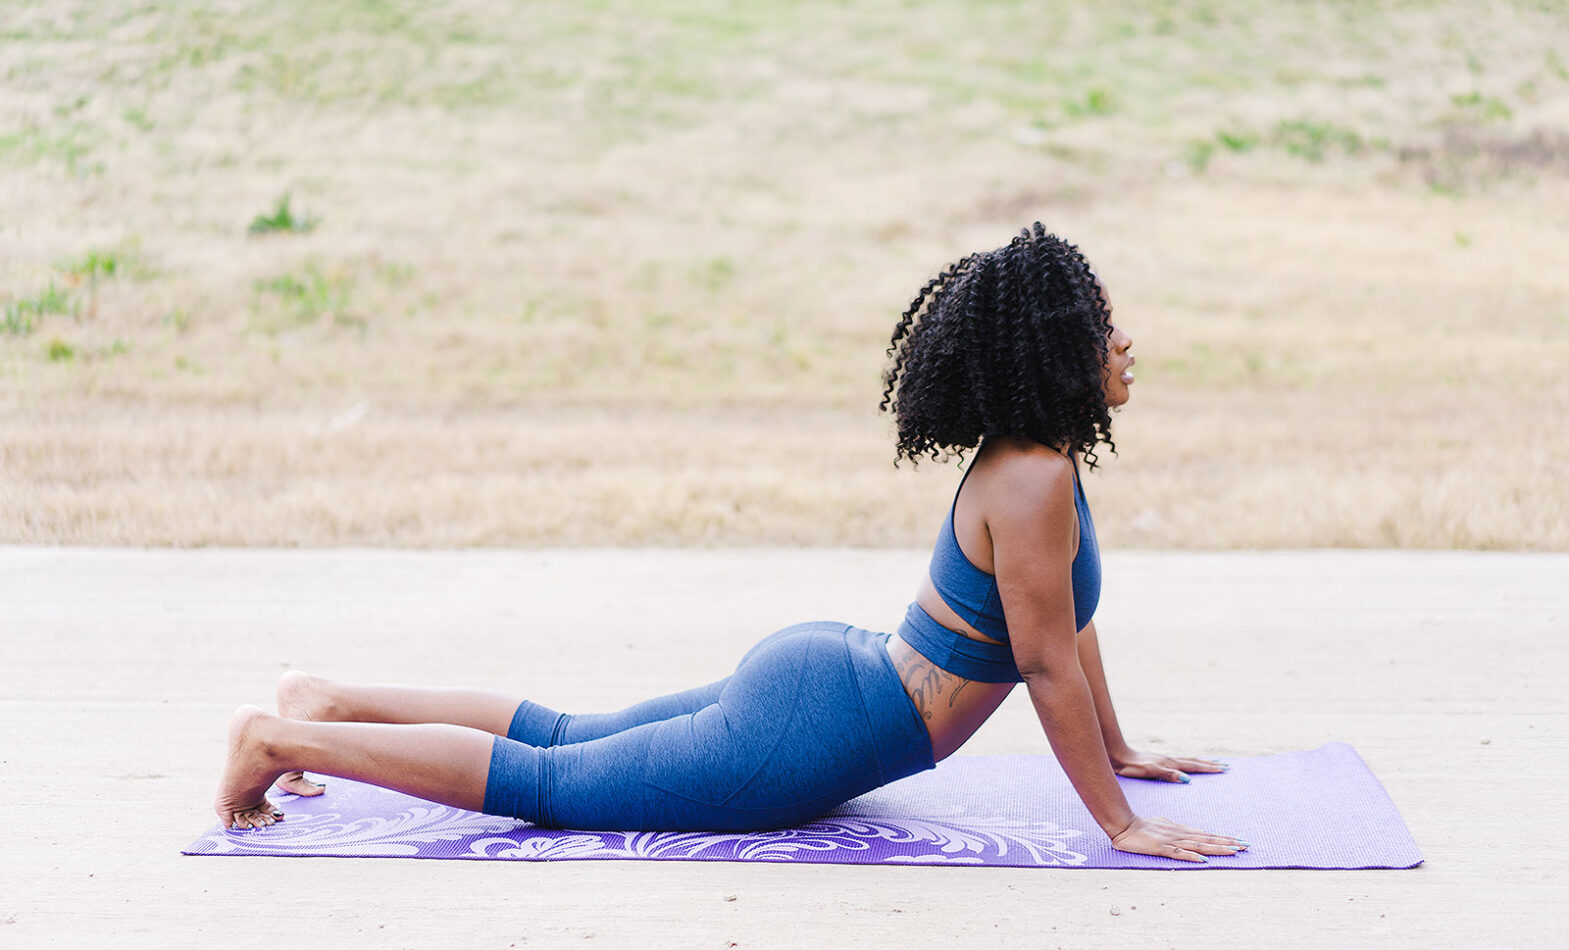 A black woman doing yoga